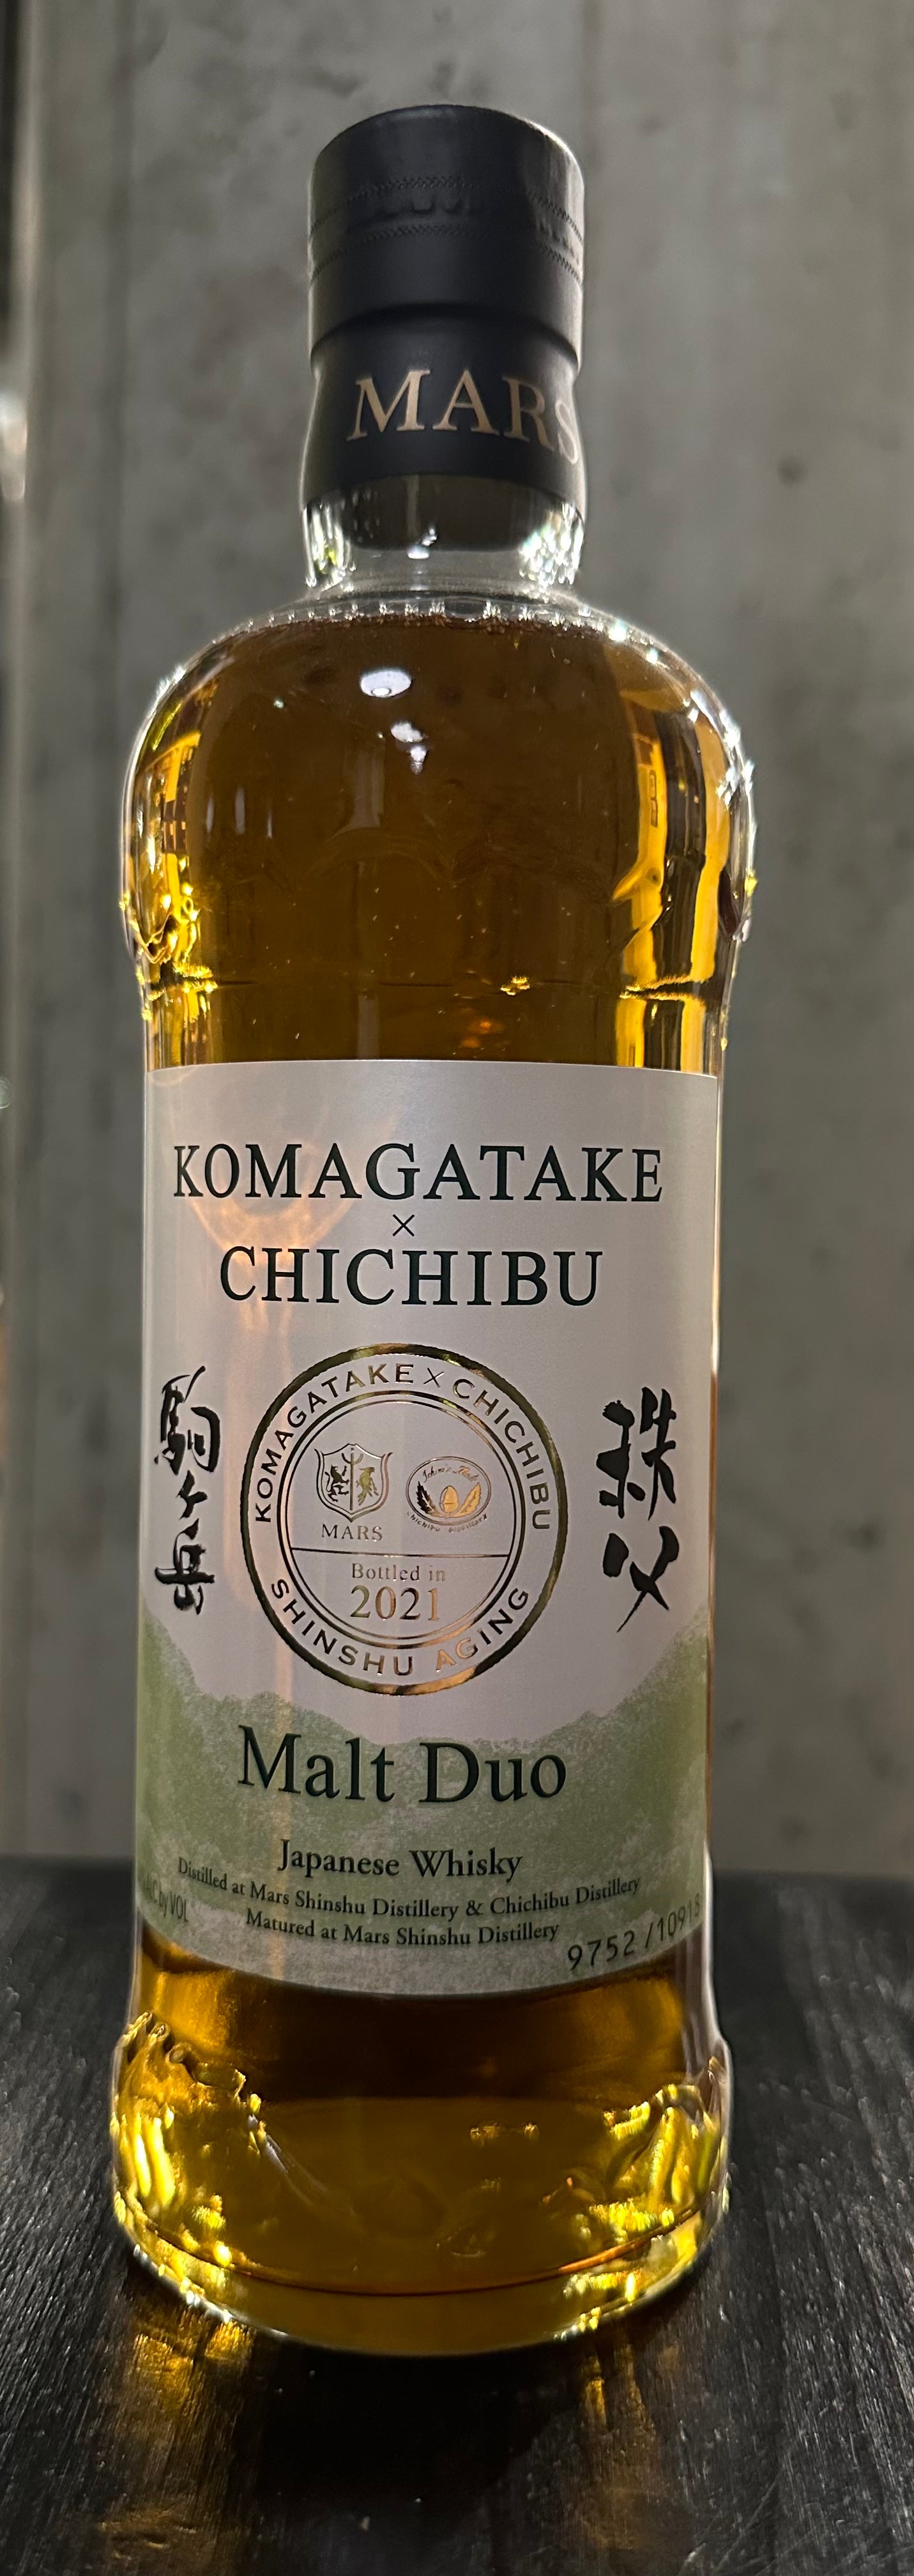 Mars "Malt Duo" Komagatake Chichibu Whisky (Bottled in 2021)